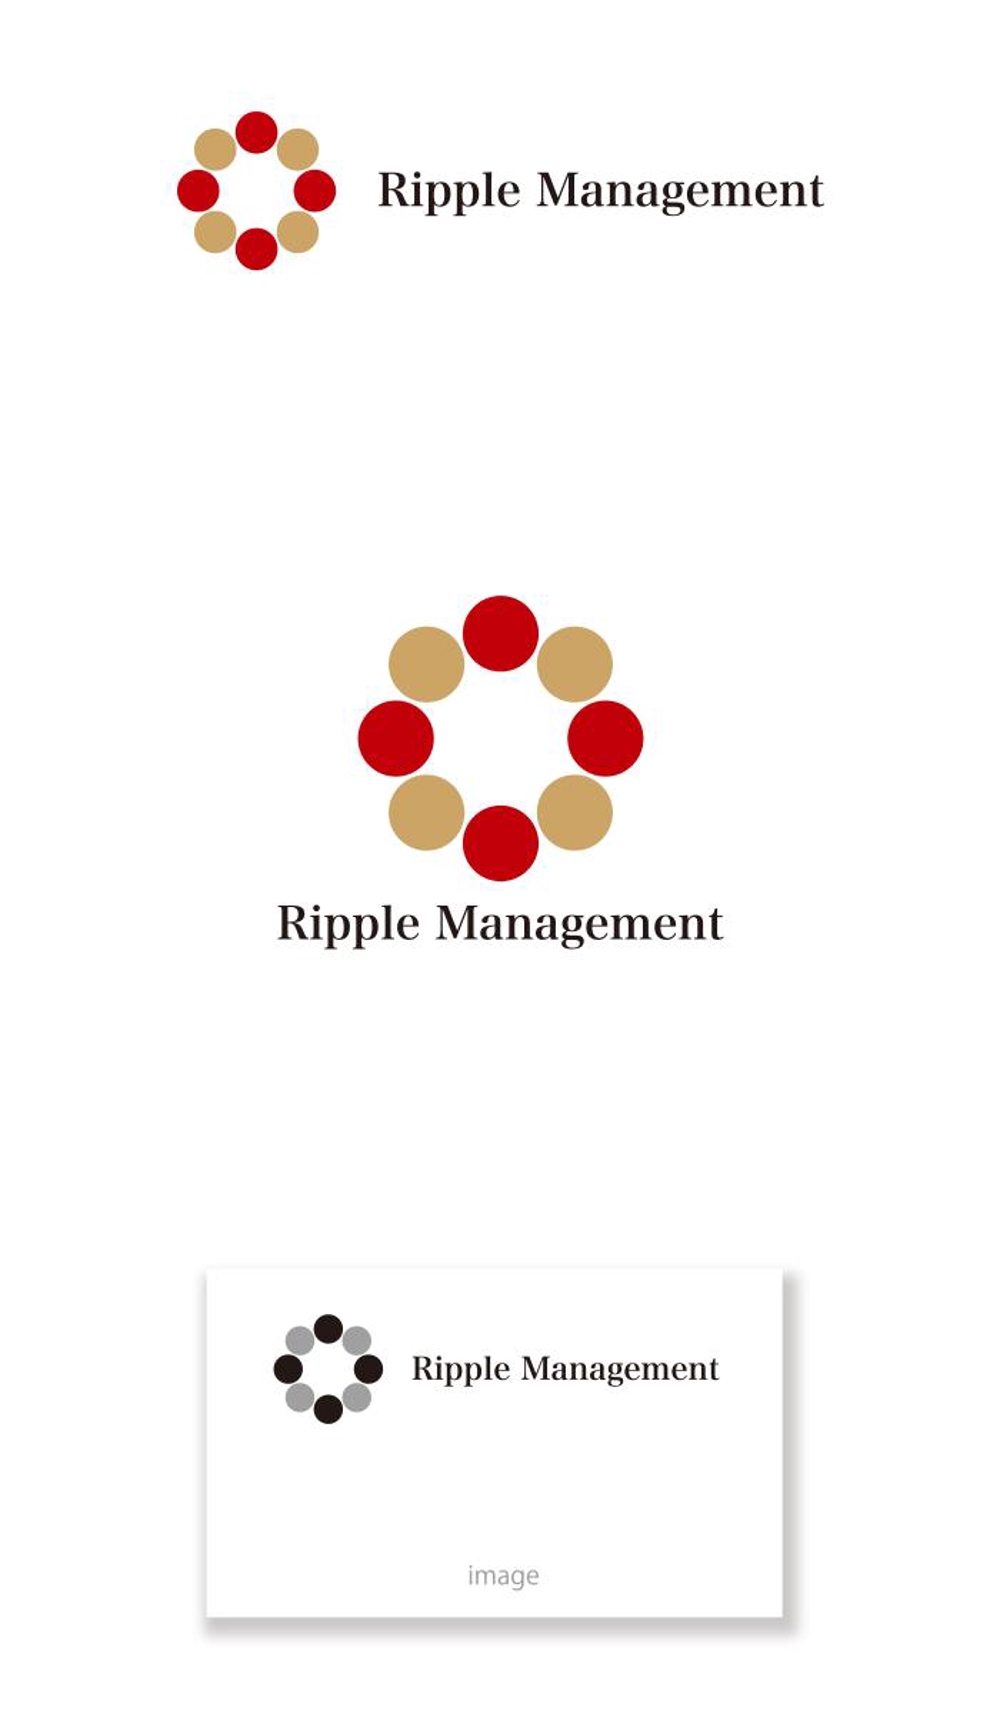 Ripple Management logo_serve.jpg